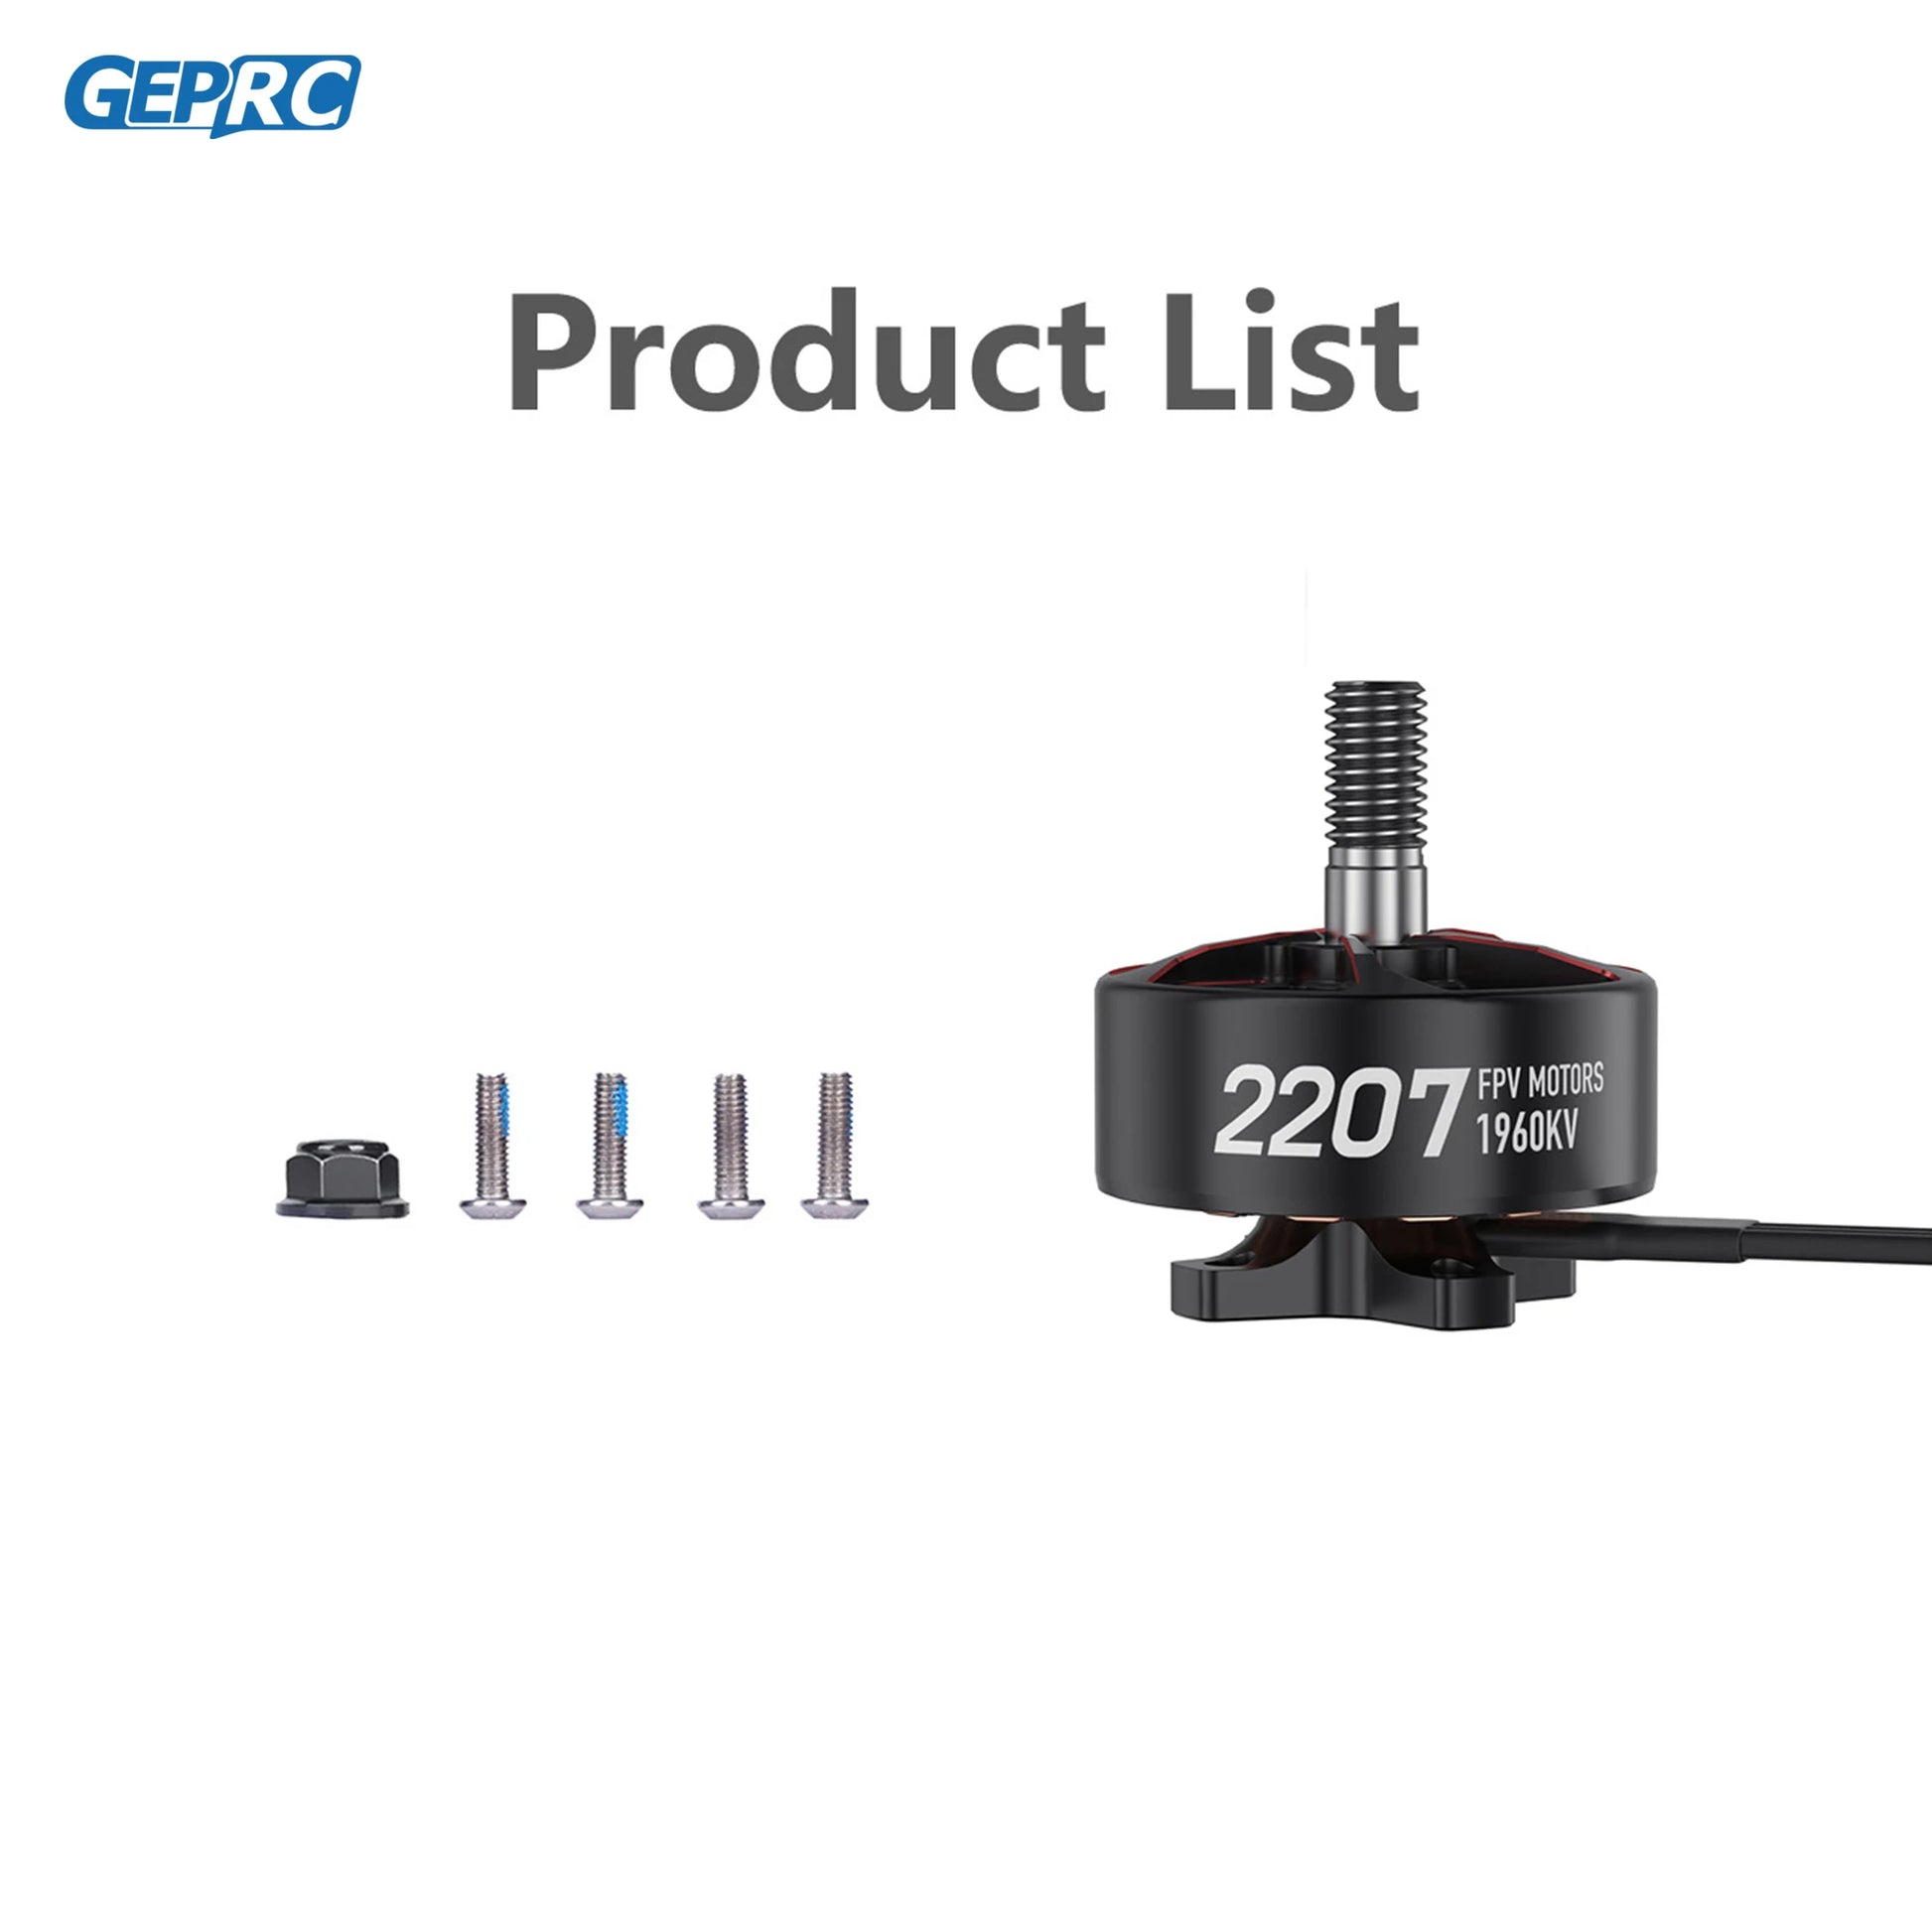 GEPRC Product List FPV MOTORS L lll 220*7